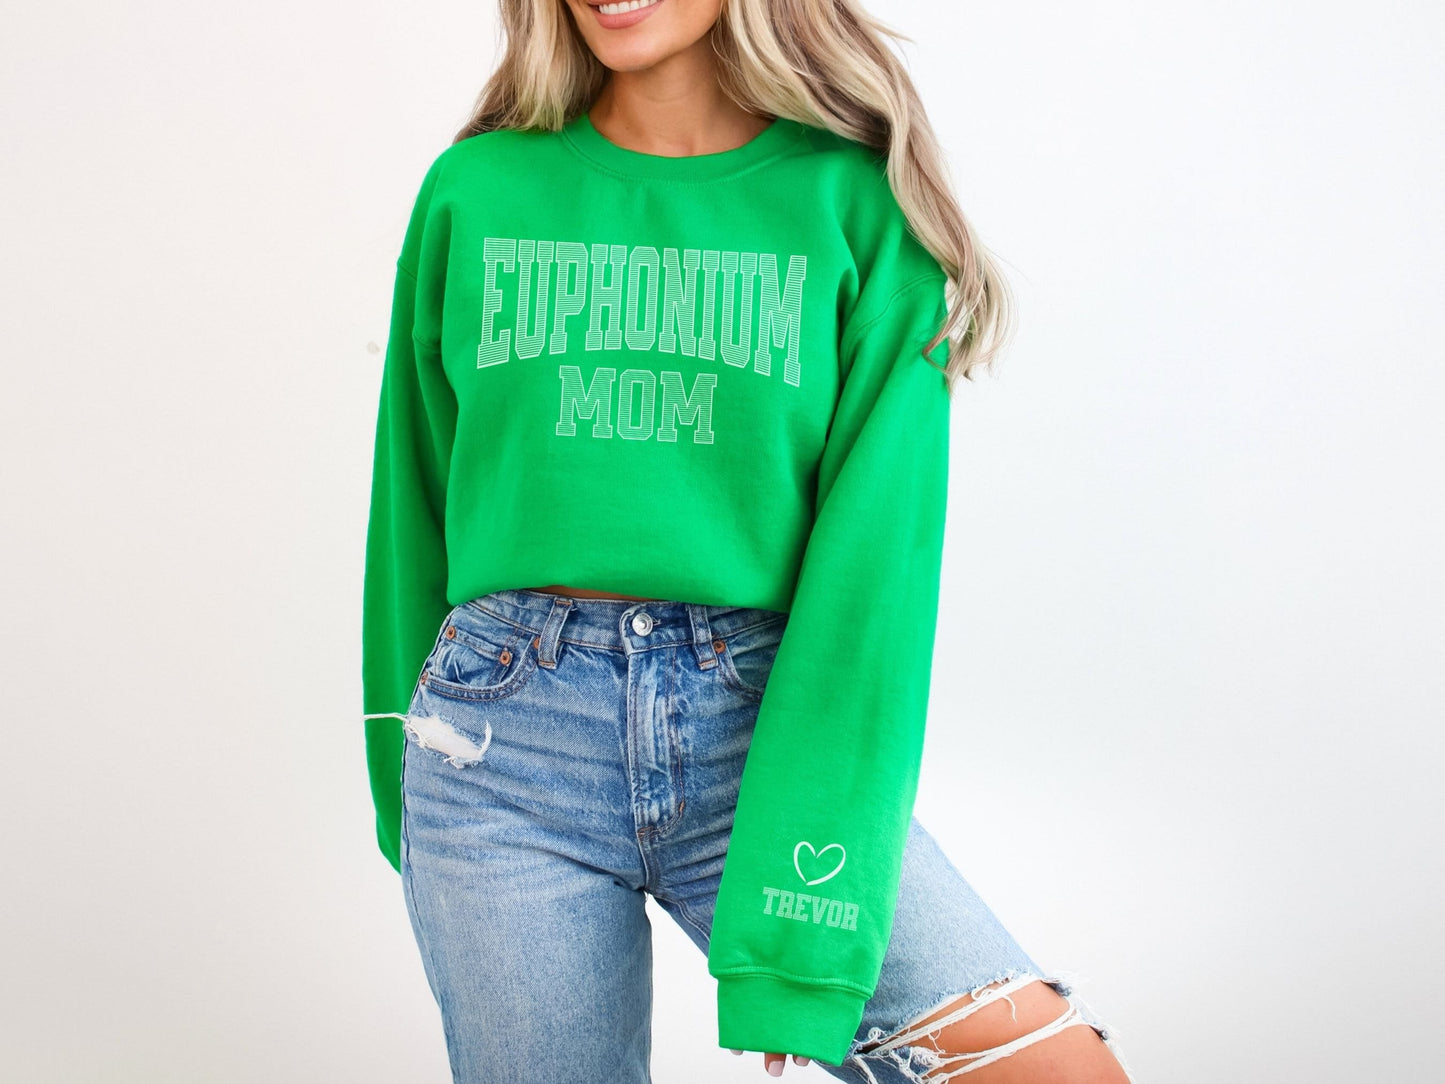 Euphonium Mom Sweatshirt with Custom Sleeve Design